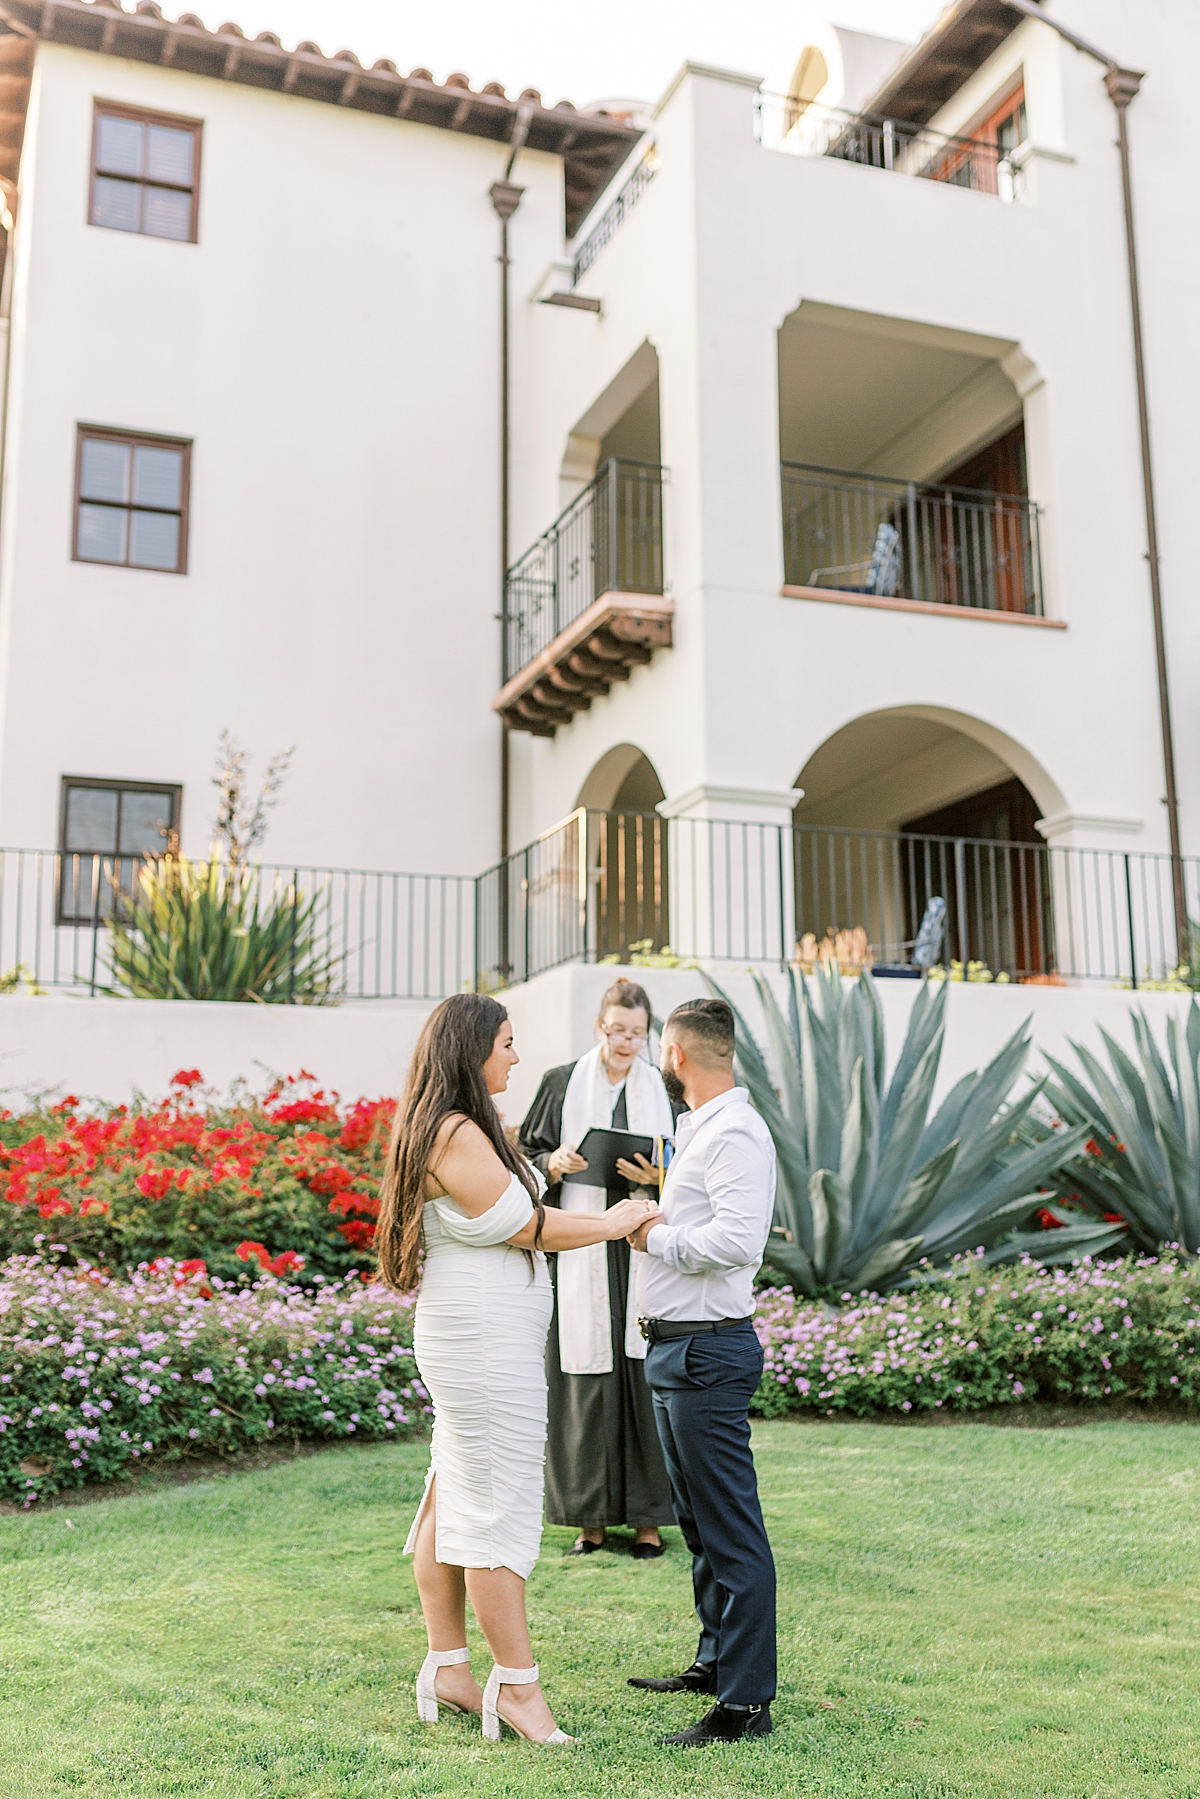 Bella & Omid holding hands during their ceremony at the Ritz-Carlton Bacara in Santa Barbara